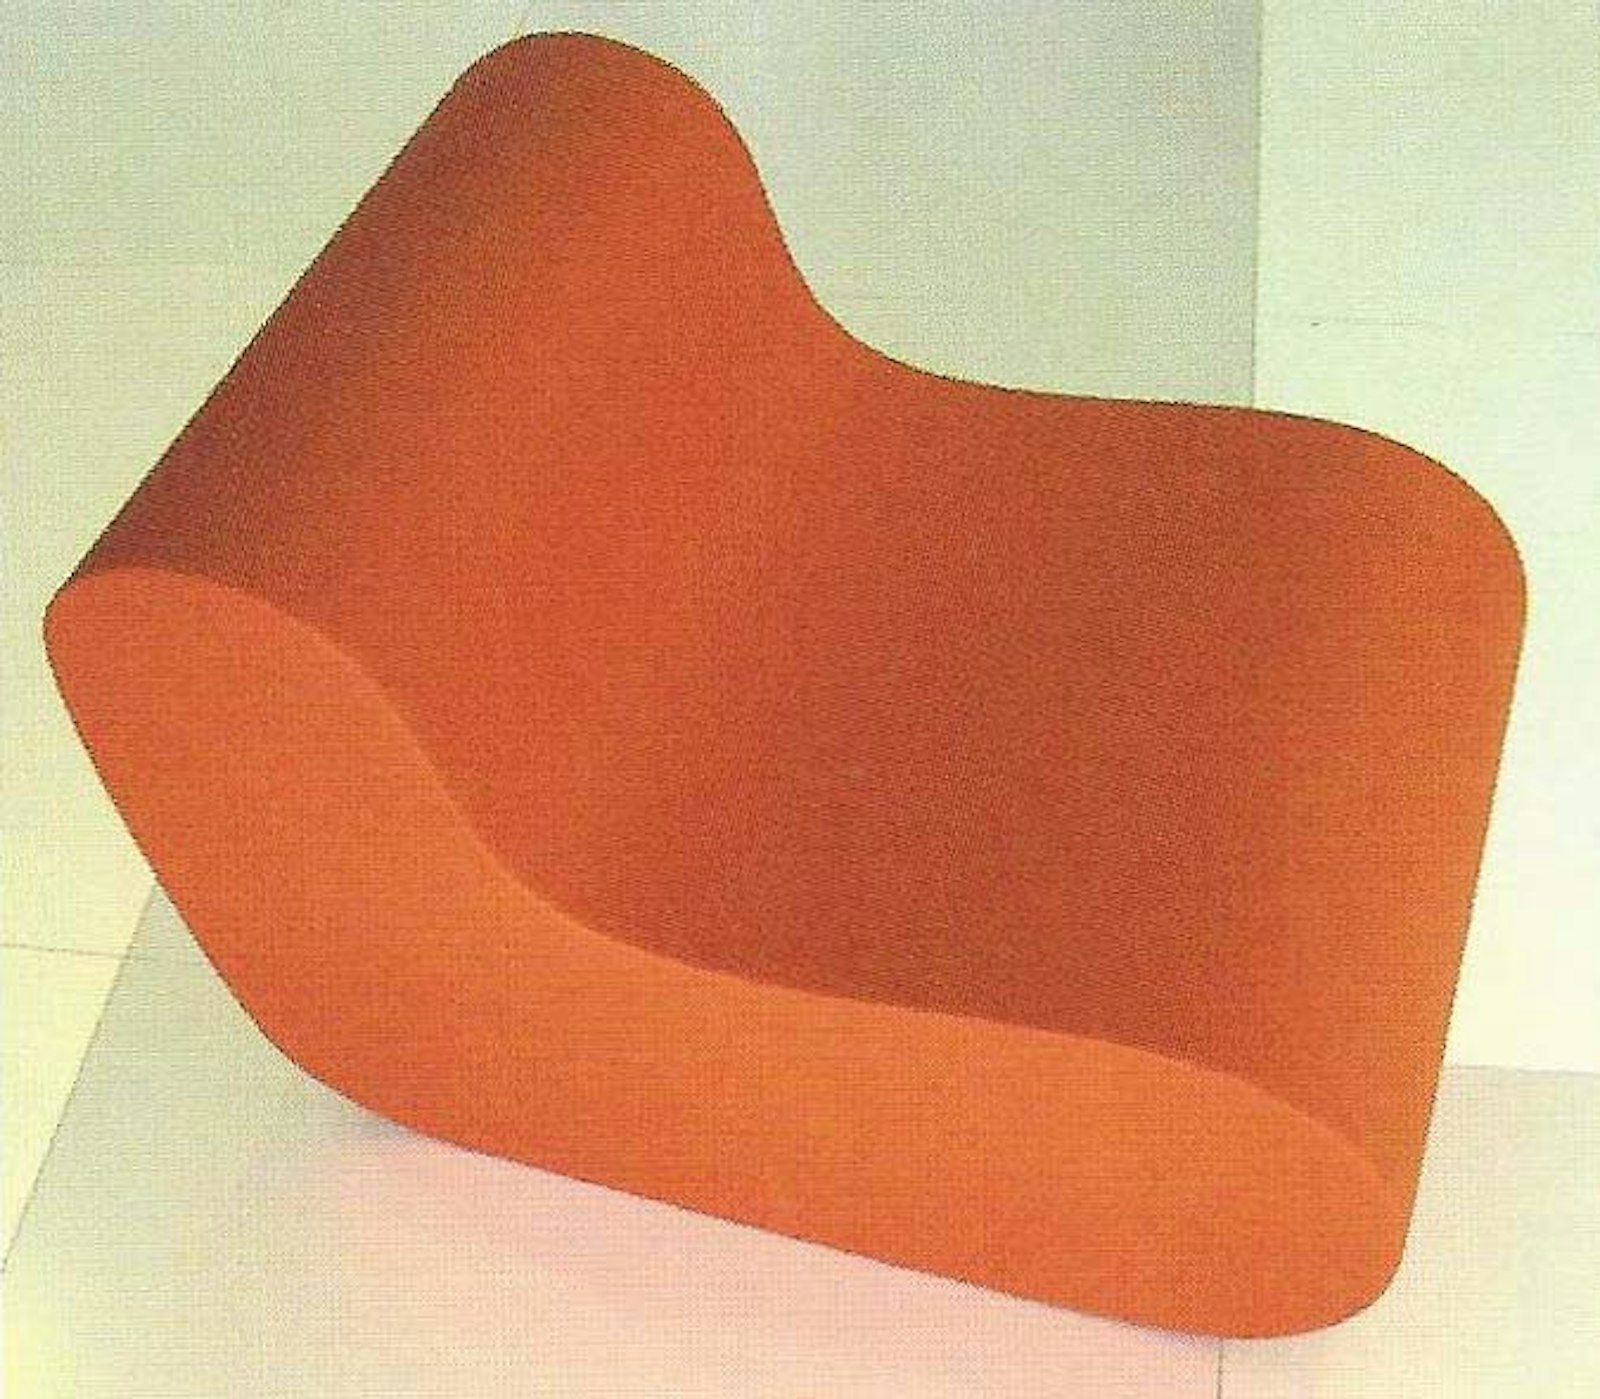 'PCM' (per centimeter) (2004), seat for Kantoorinrichting Stulens (Hasselt)